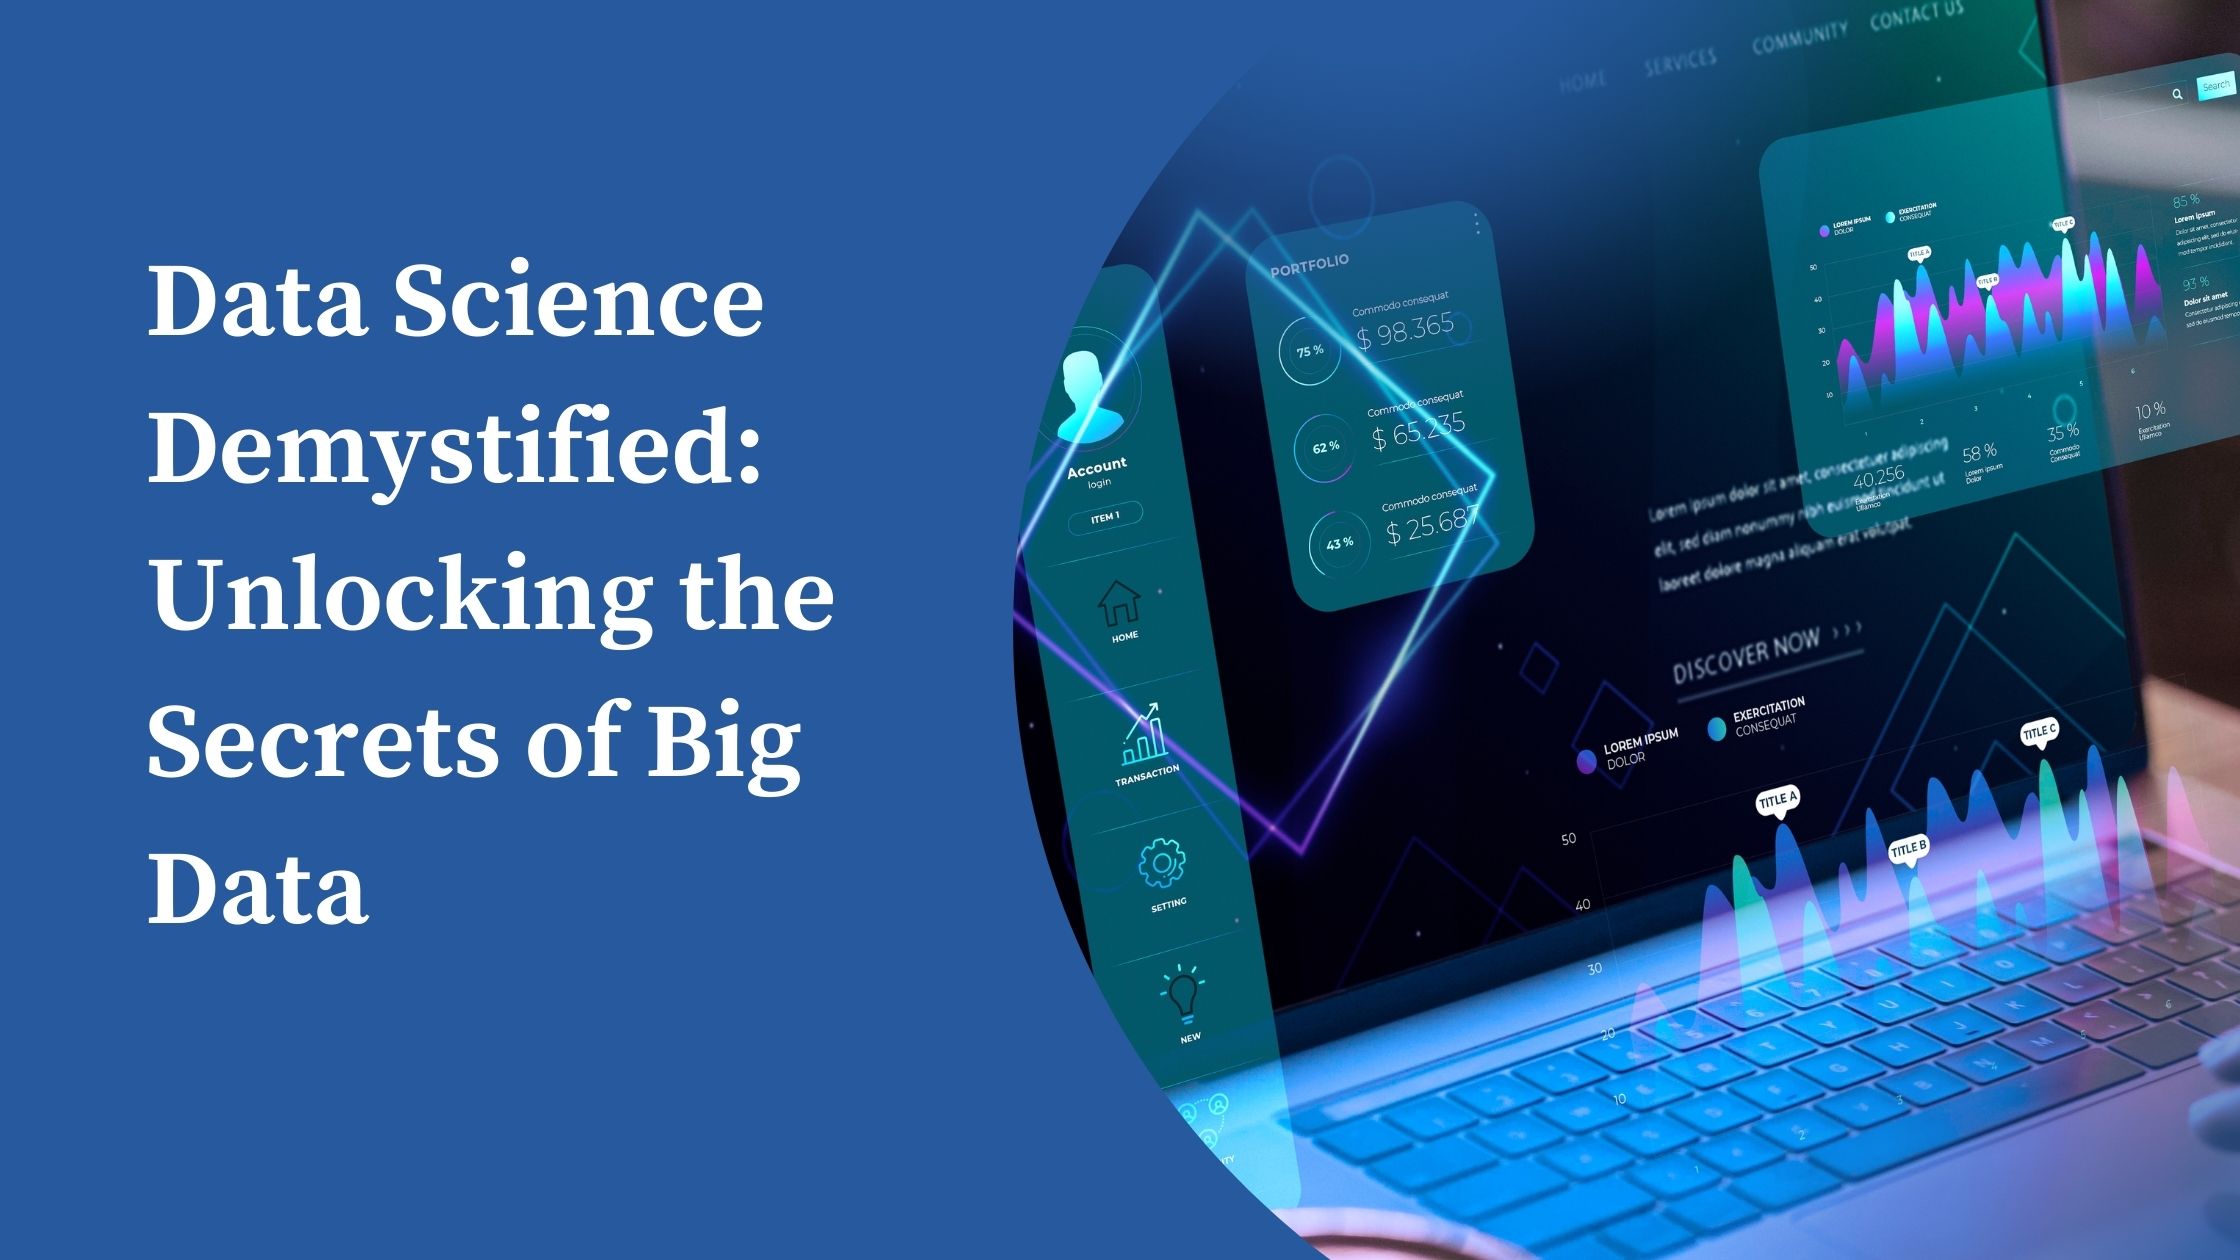 Data Science Demystified: Unlocking the Secrets of Big Data